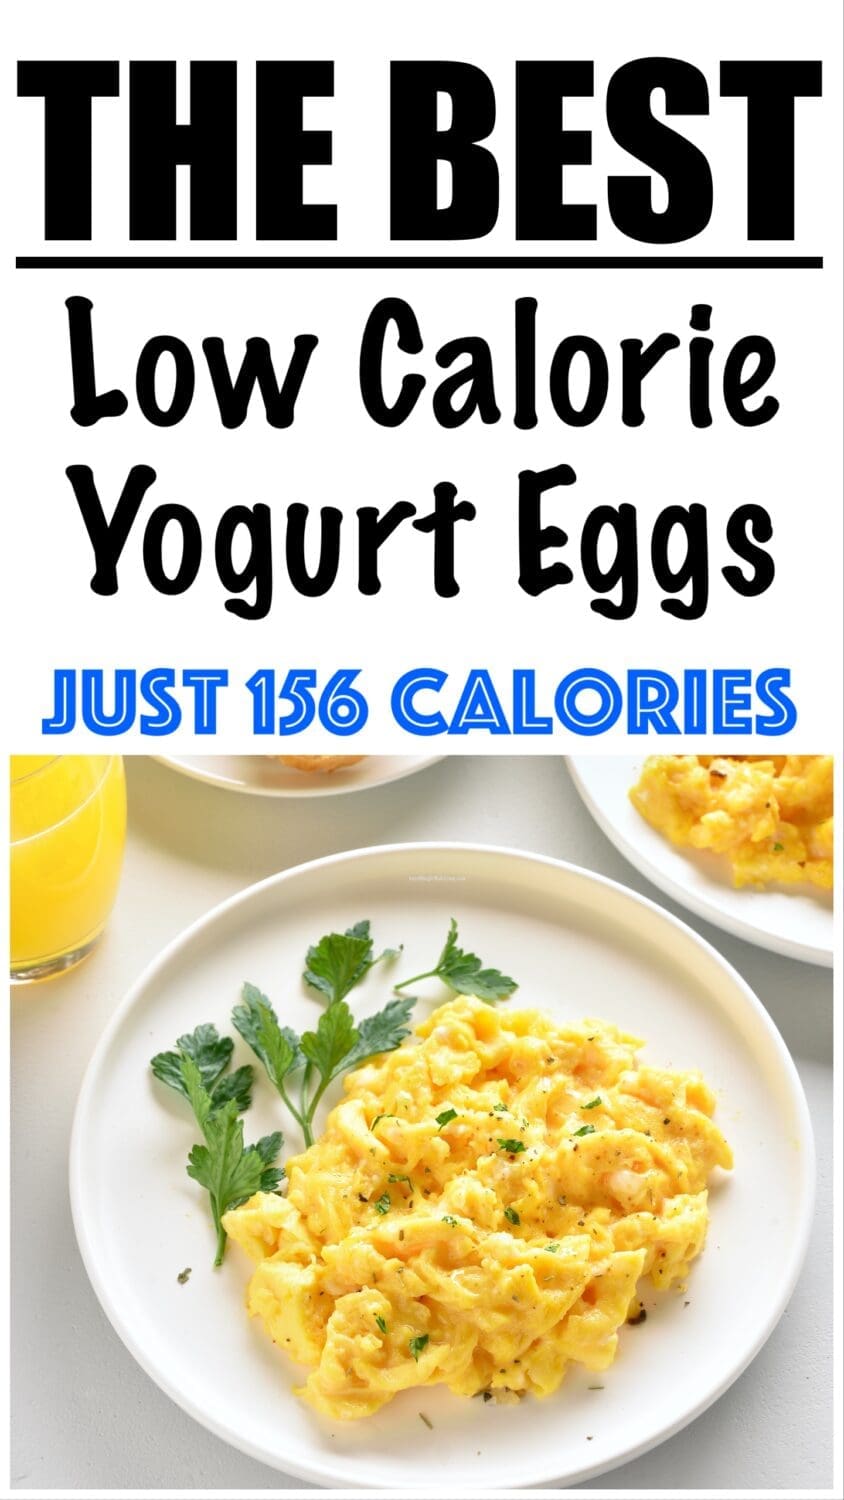 Healthy Yogurt Eggs